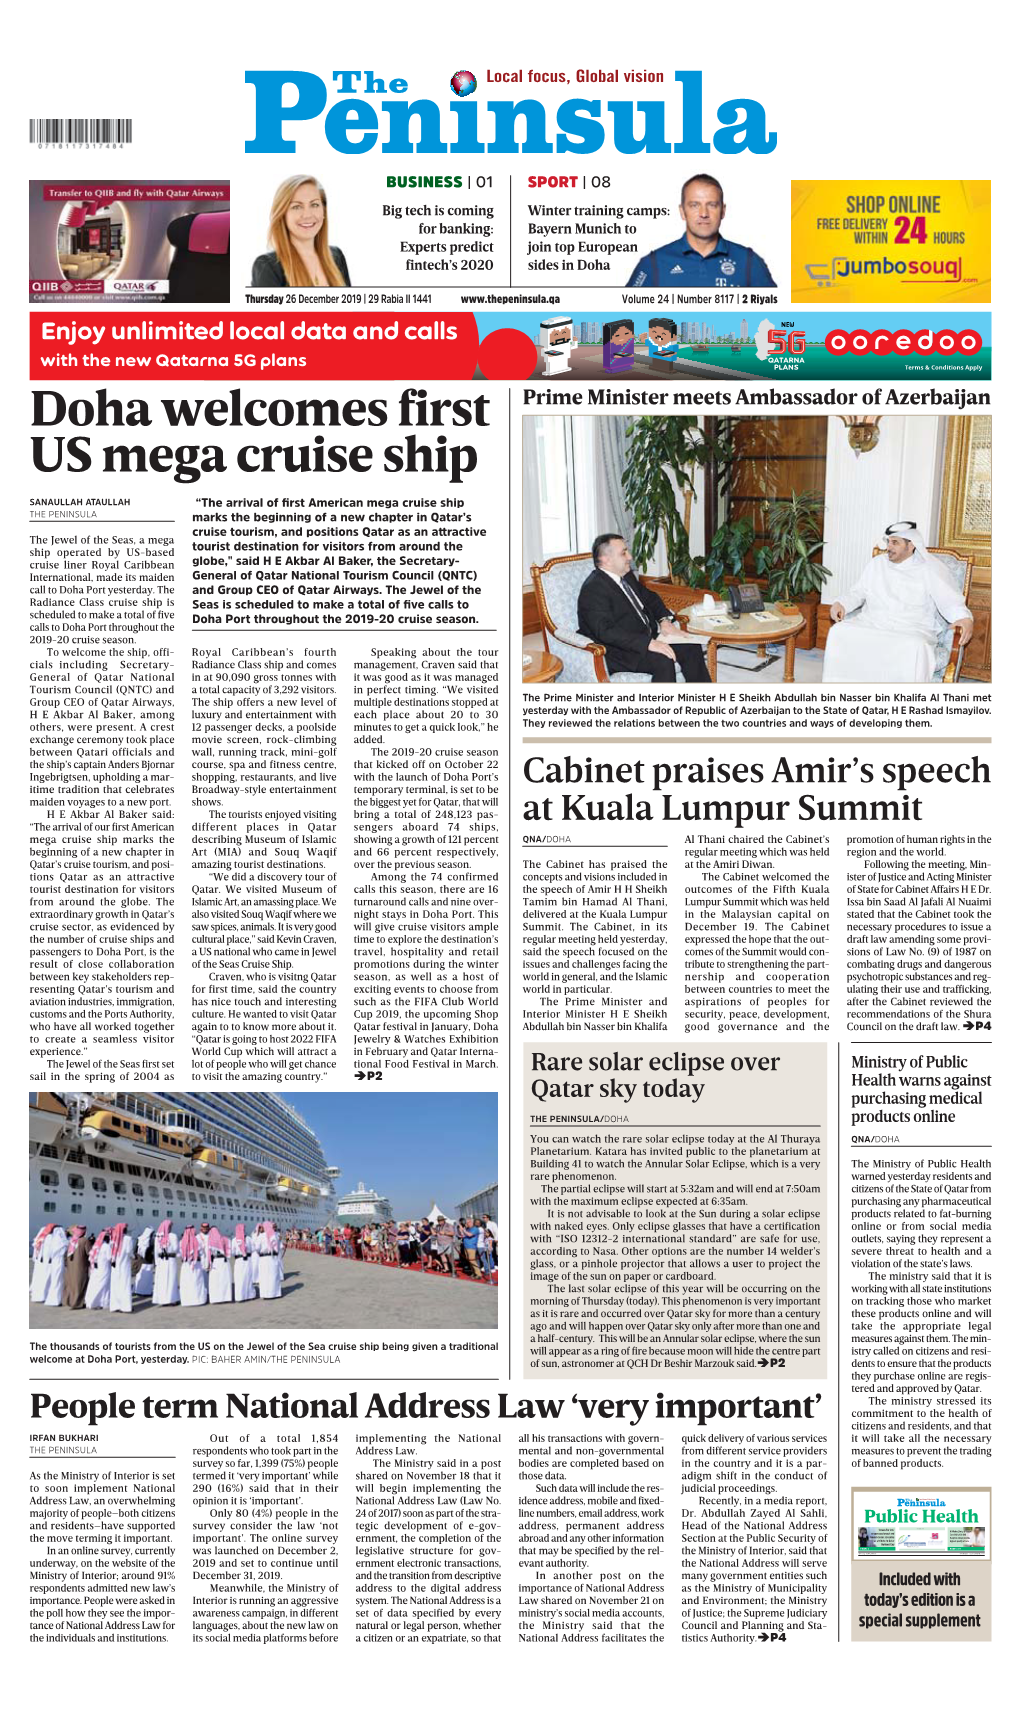 Doha Welcomes First US Mega Cruise Ship